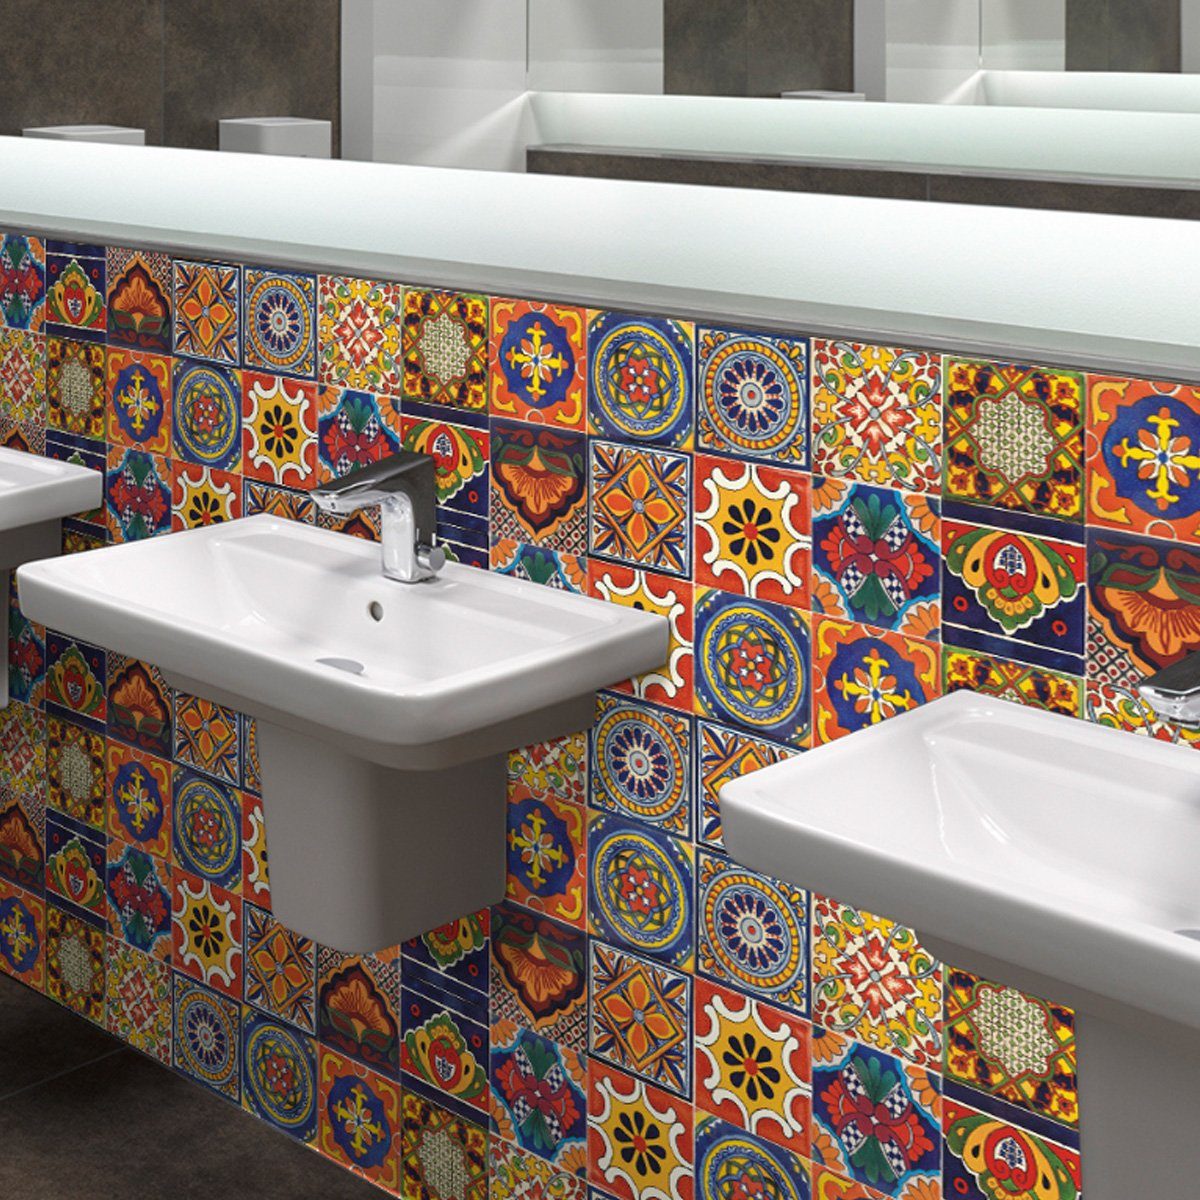 Jormftte Fliesenaufkleber 3 Wandfliese Badezimmer Küche Wandaufkleber,Bunt Mehrfarbig Mosaik Aufkleber,für